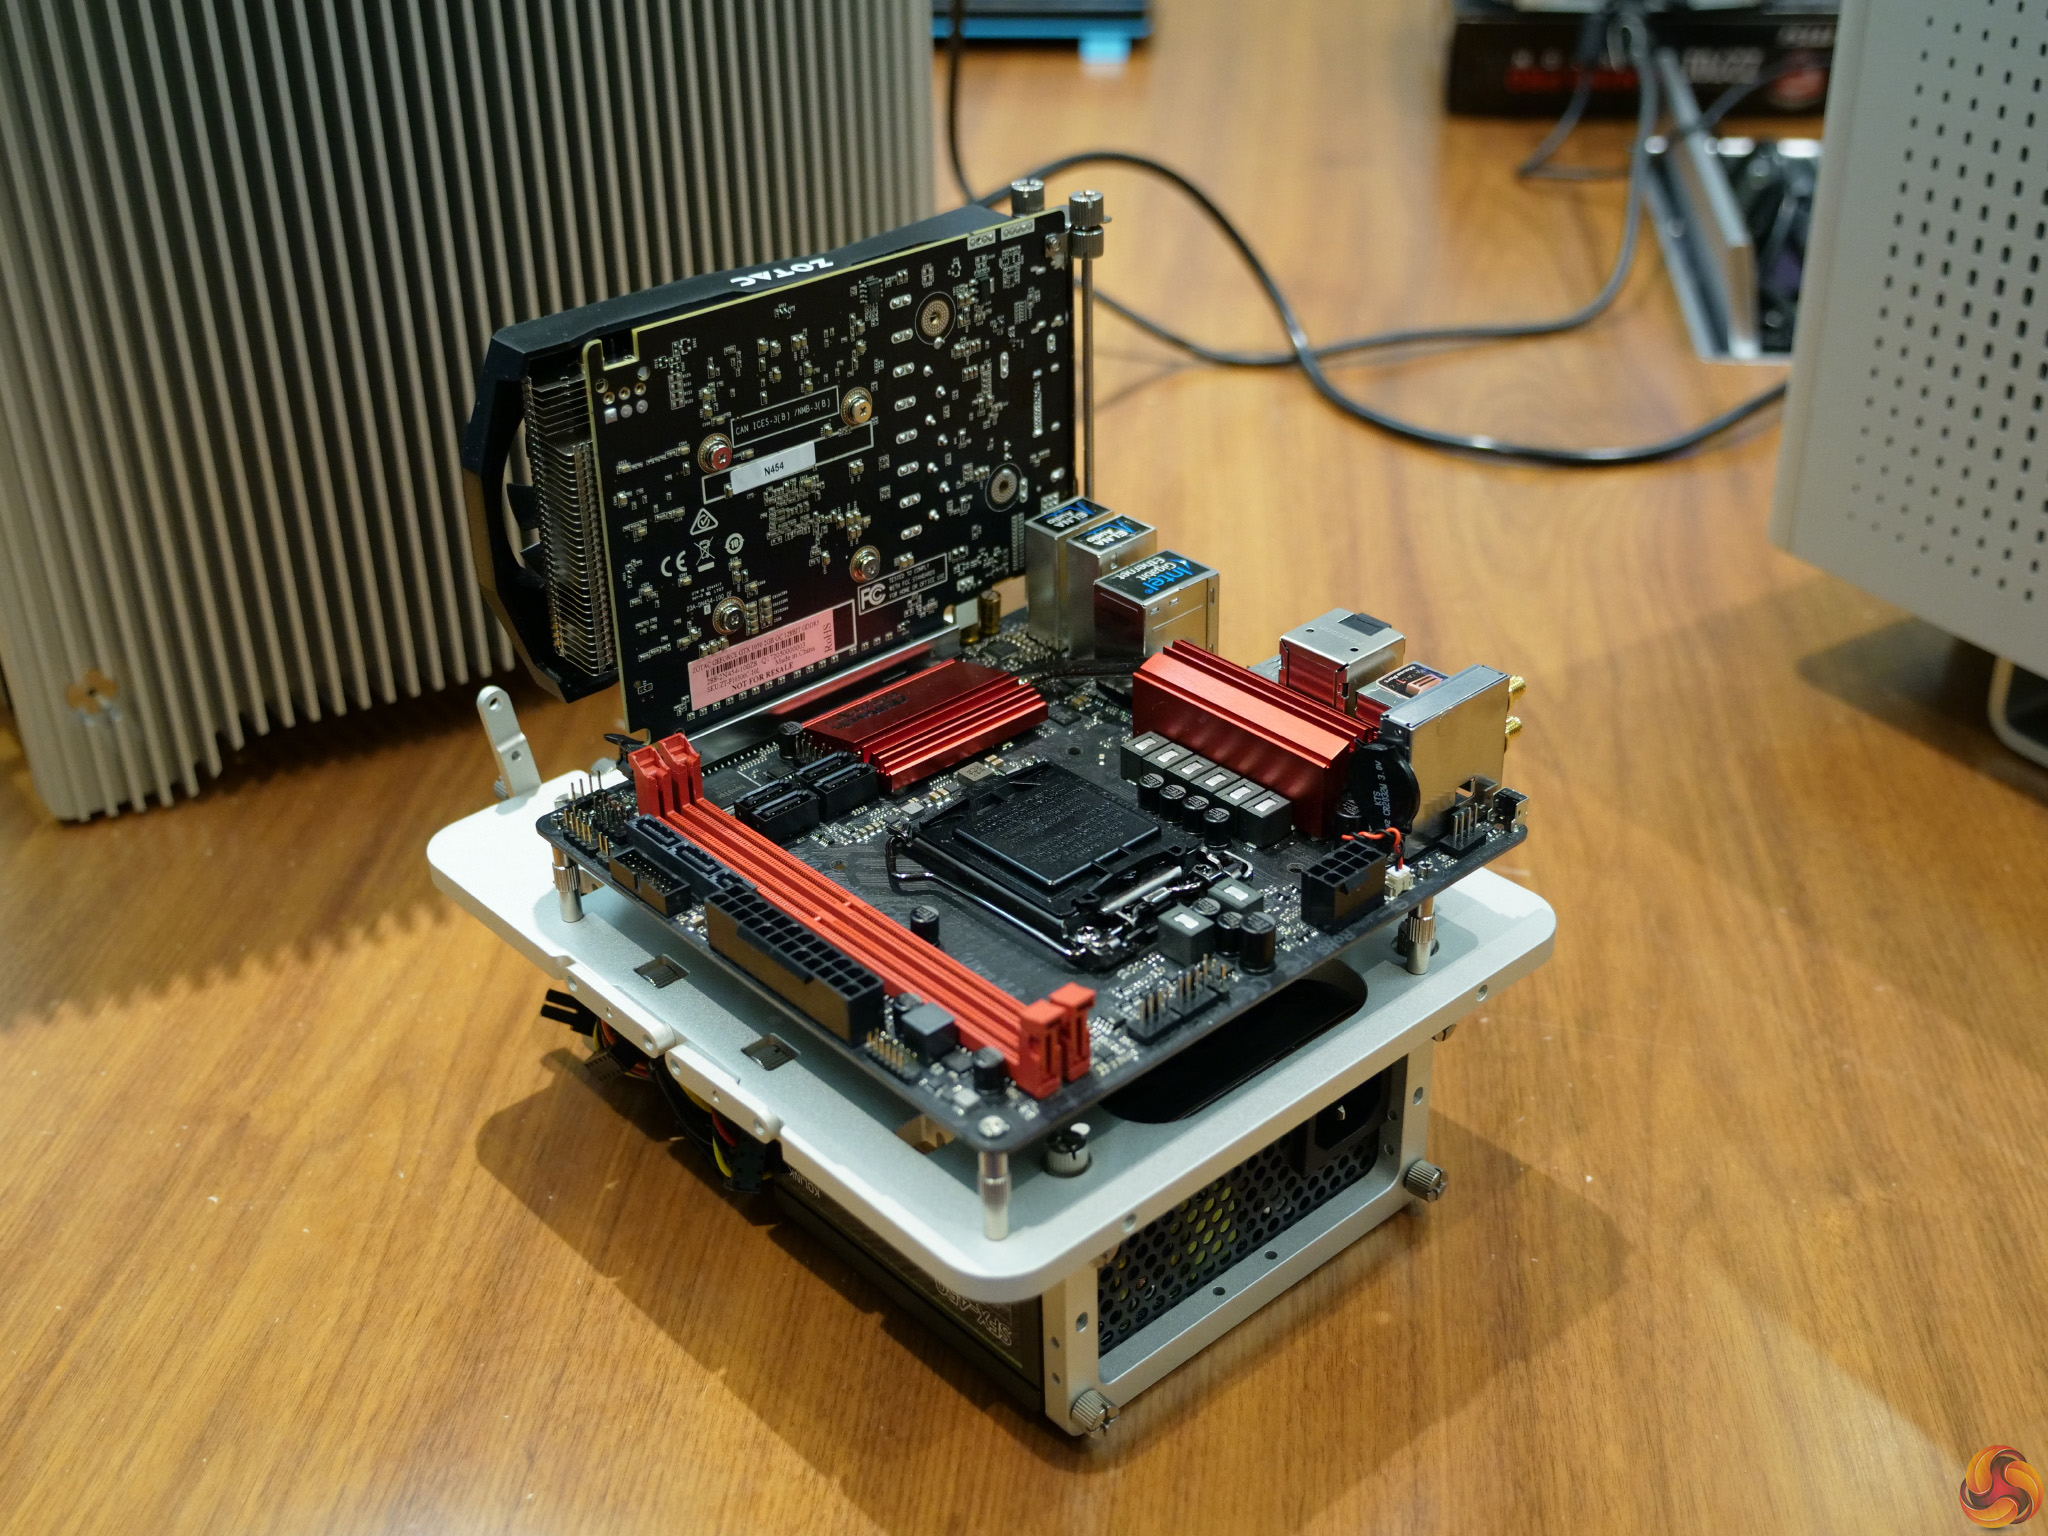 Computex: Streacom shows off new hardware benches and cases | KitGuru